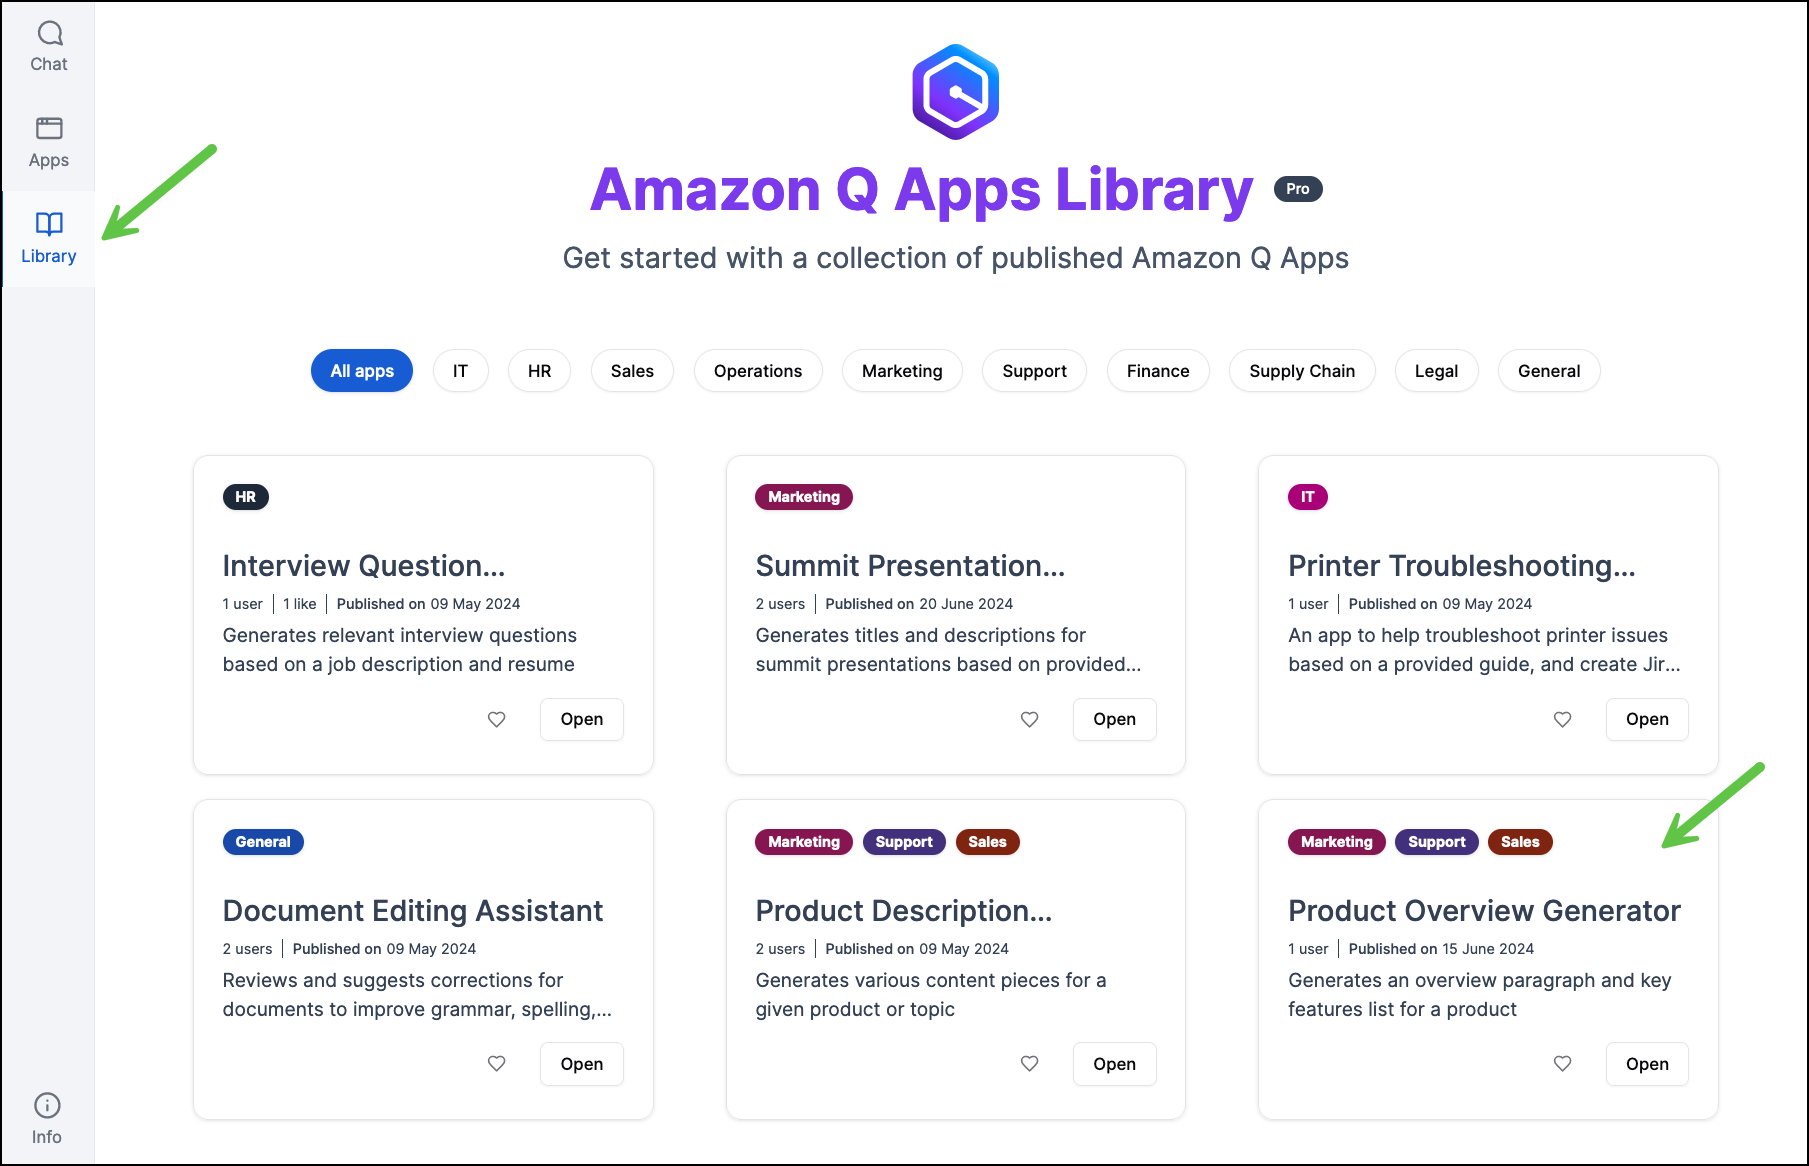 Amazon Q Apps Library